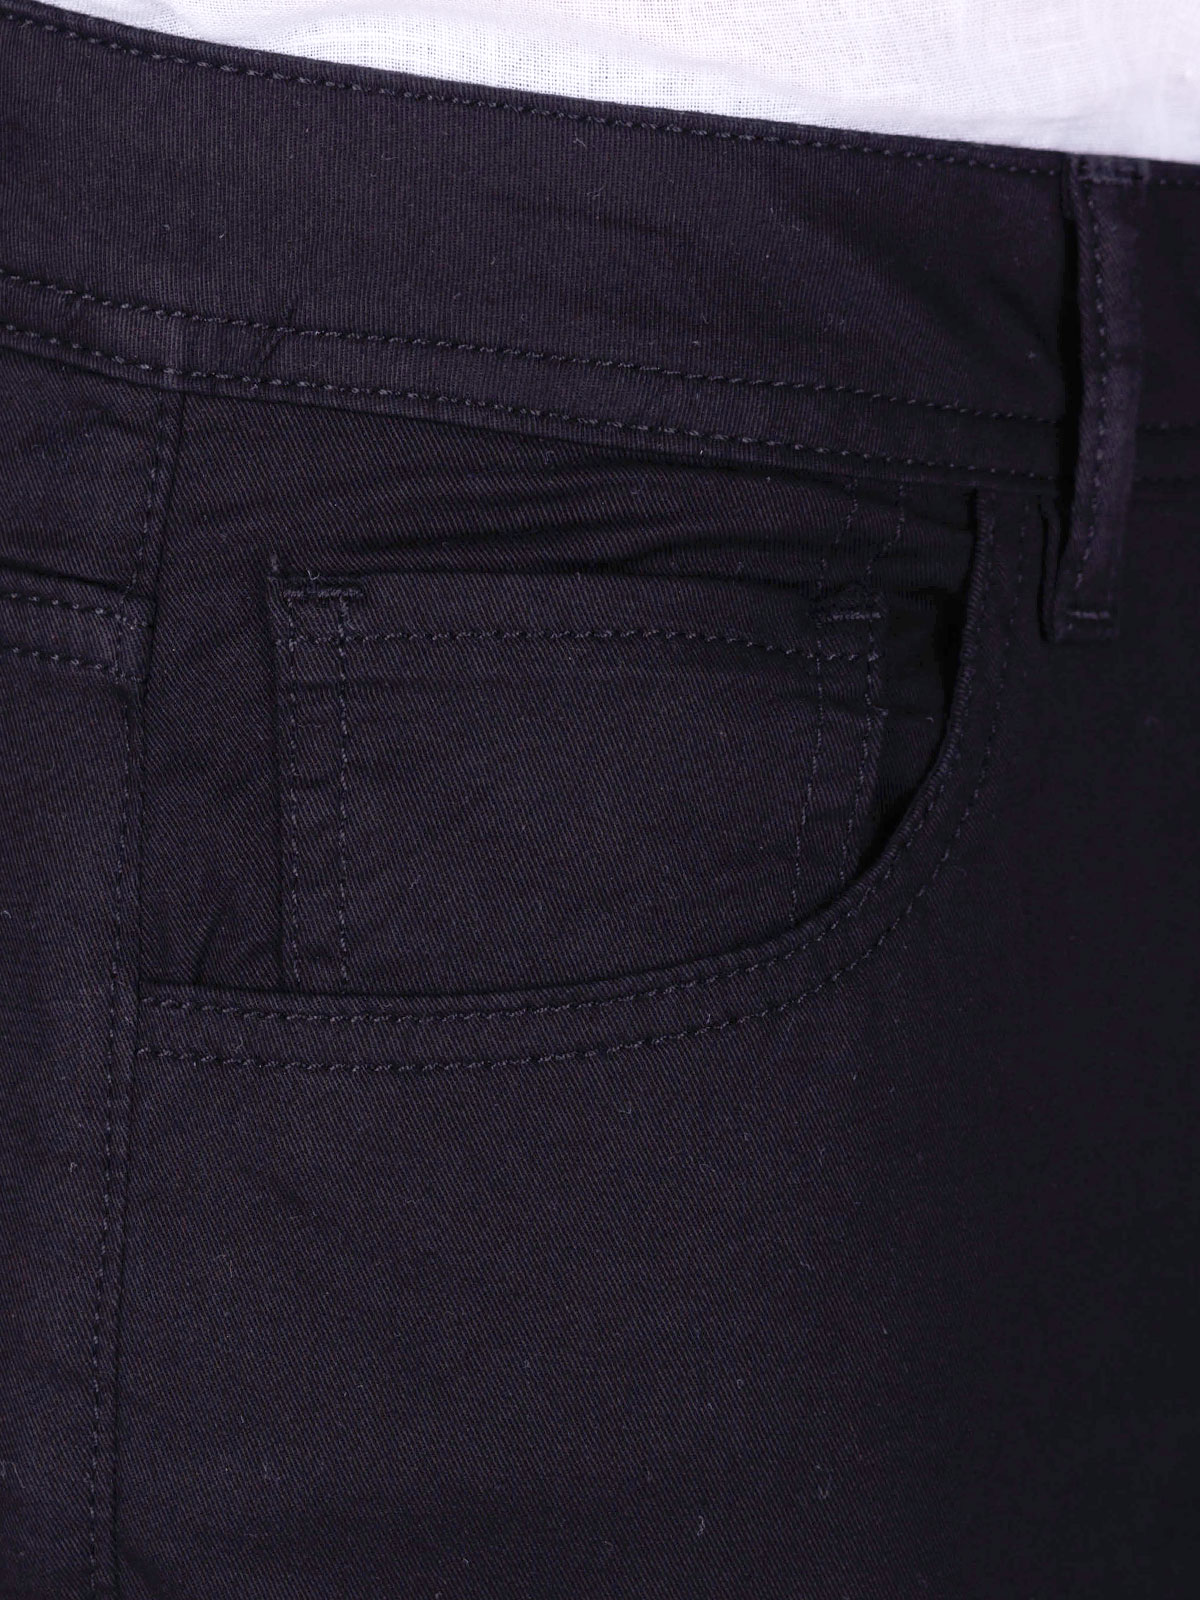 Black trousers - 60286 € 66.37 img2